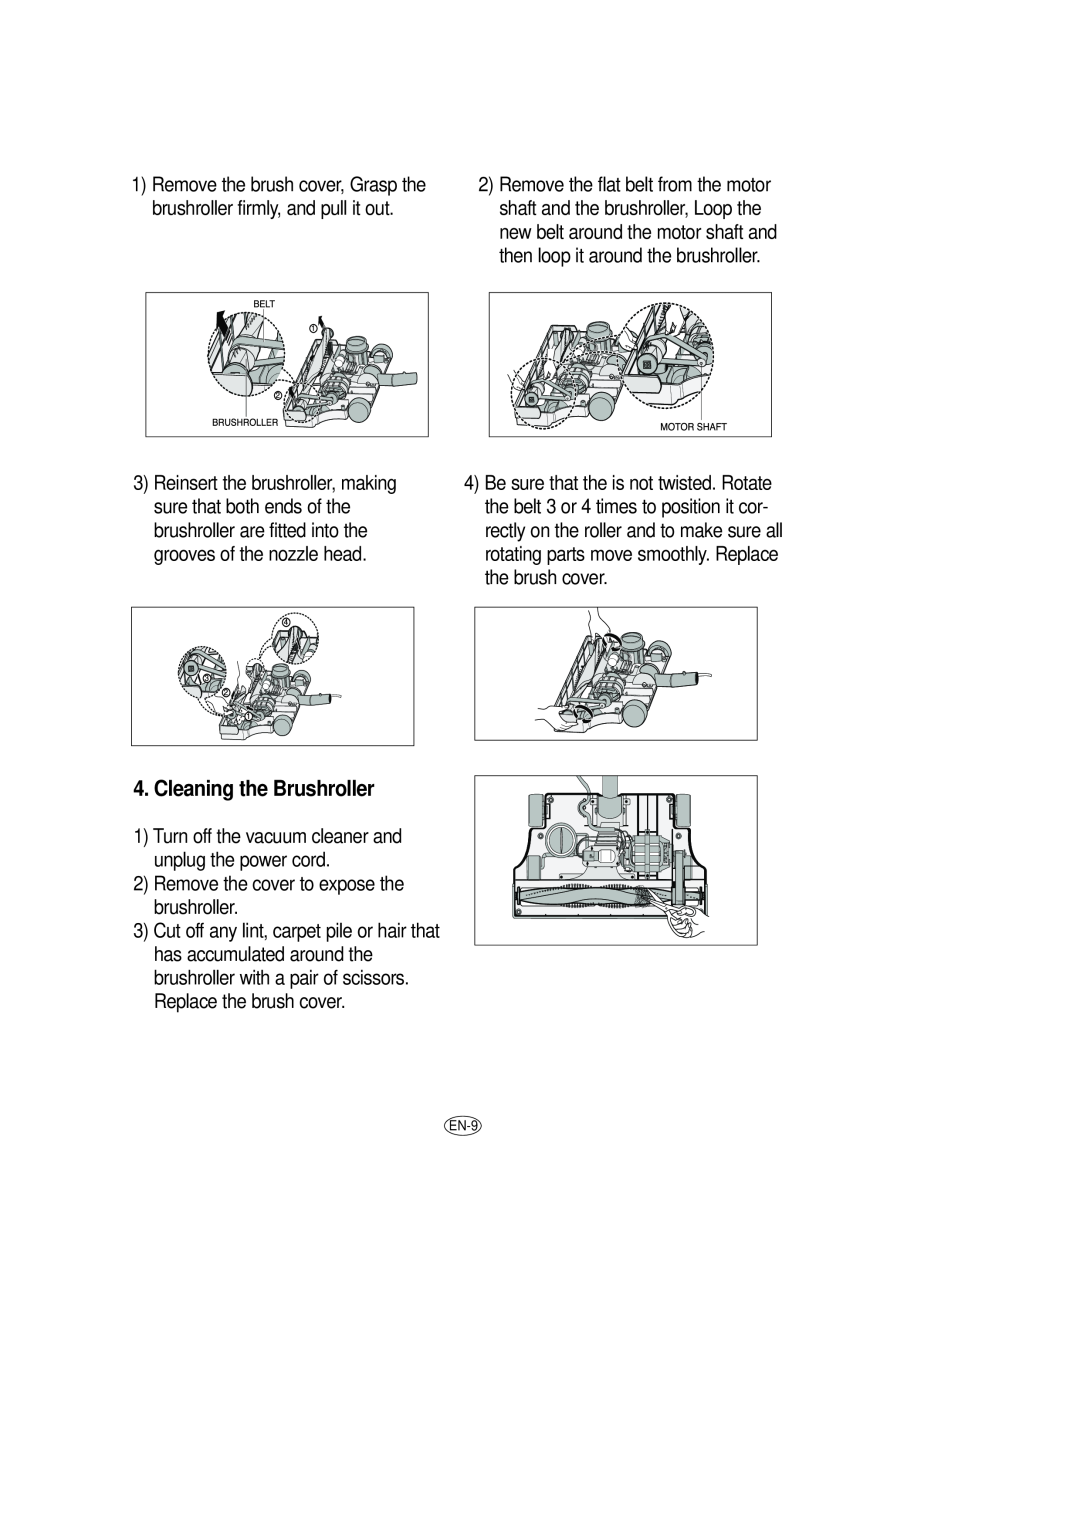 Samsung DJ68-00079J manual Cleaning the Brushroller, 2Remove the cover to expose the brushroller 